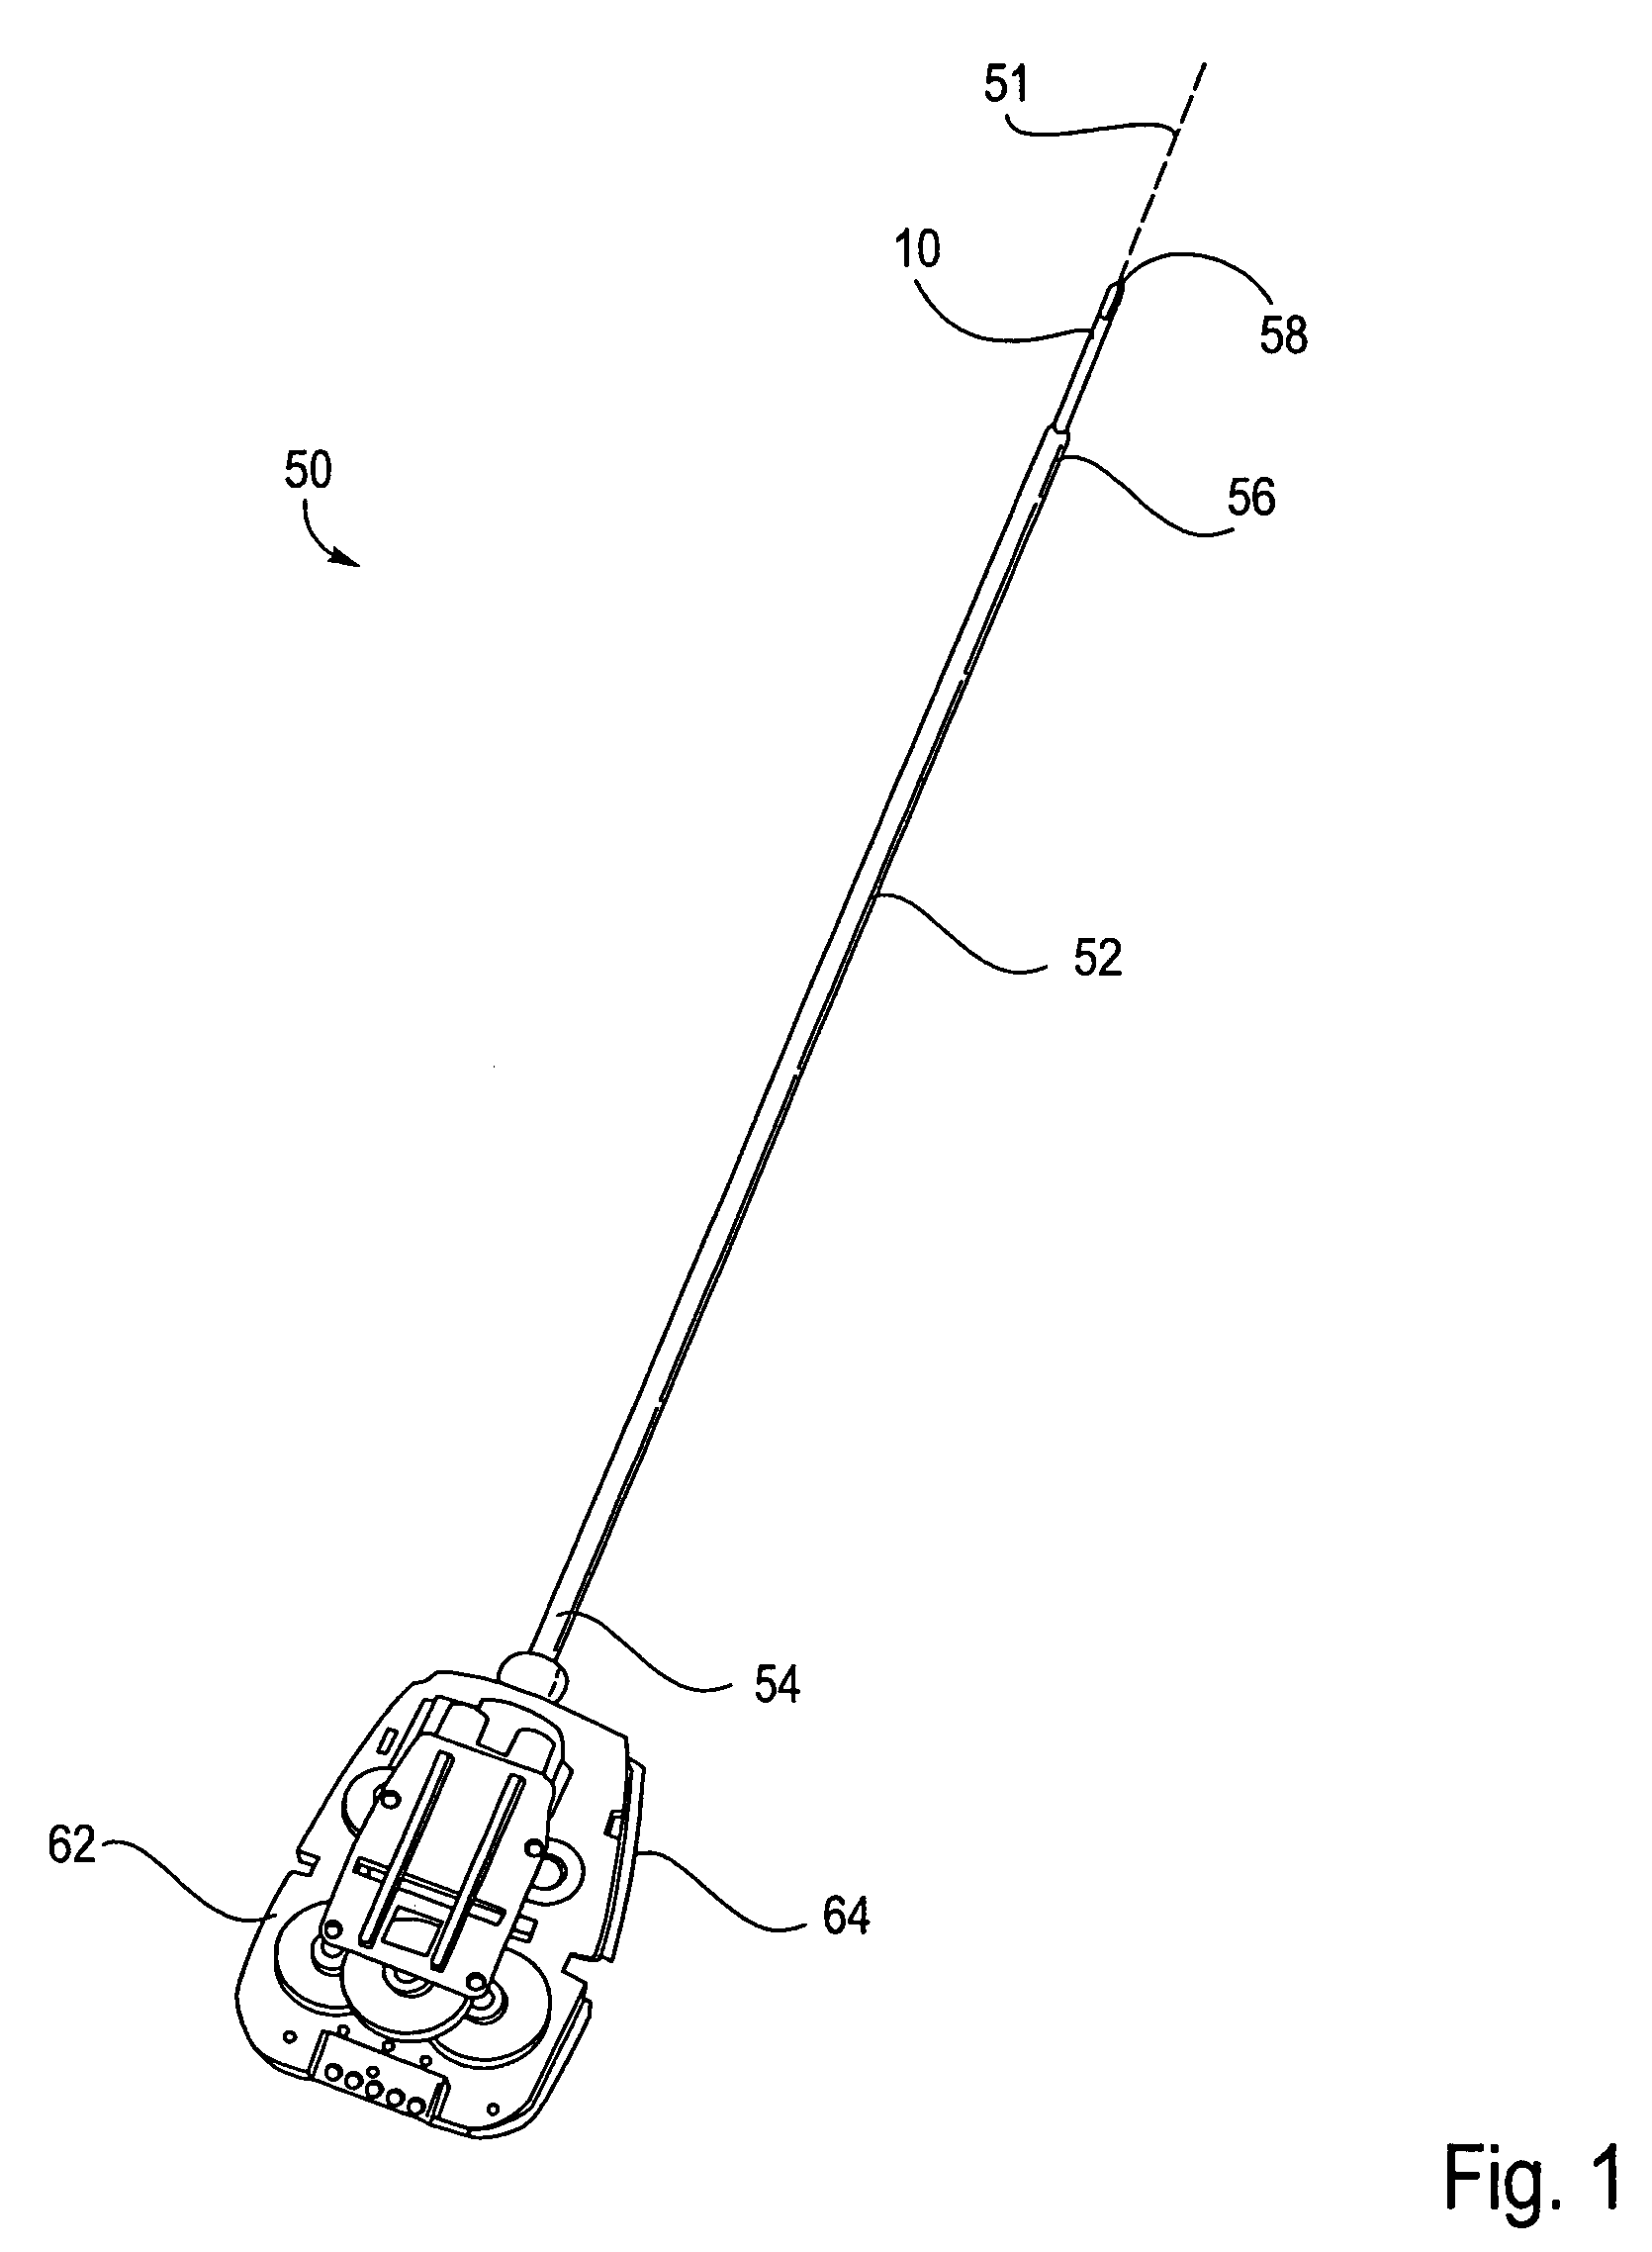 Platform link wrist mechanism